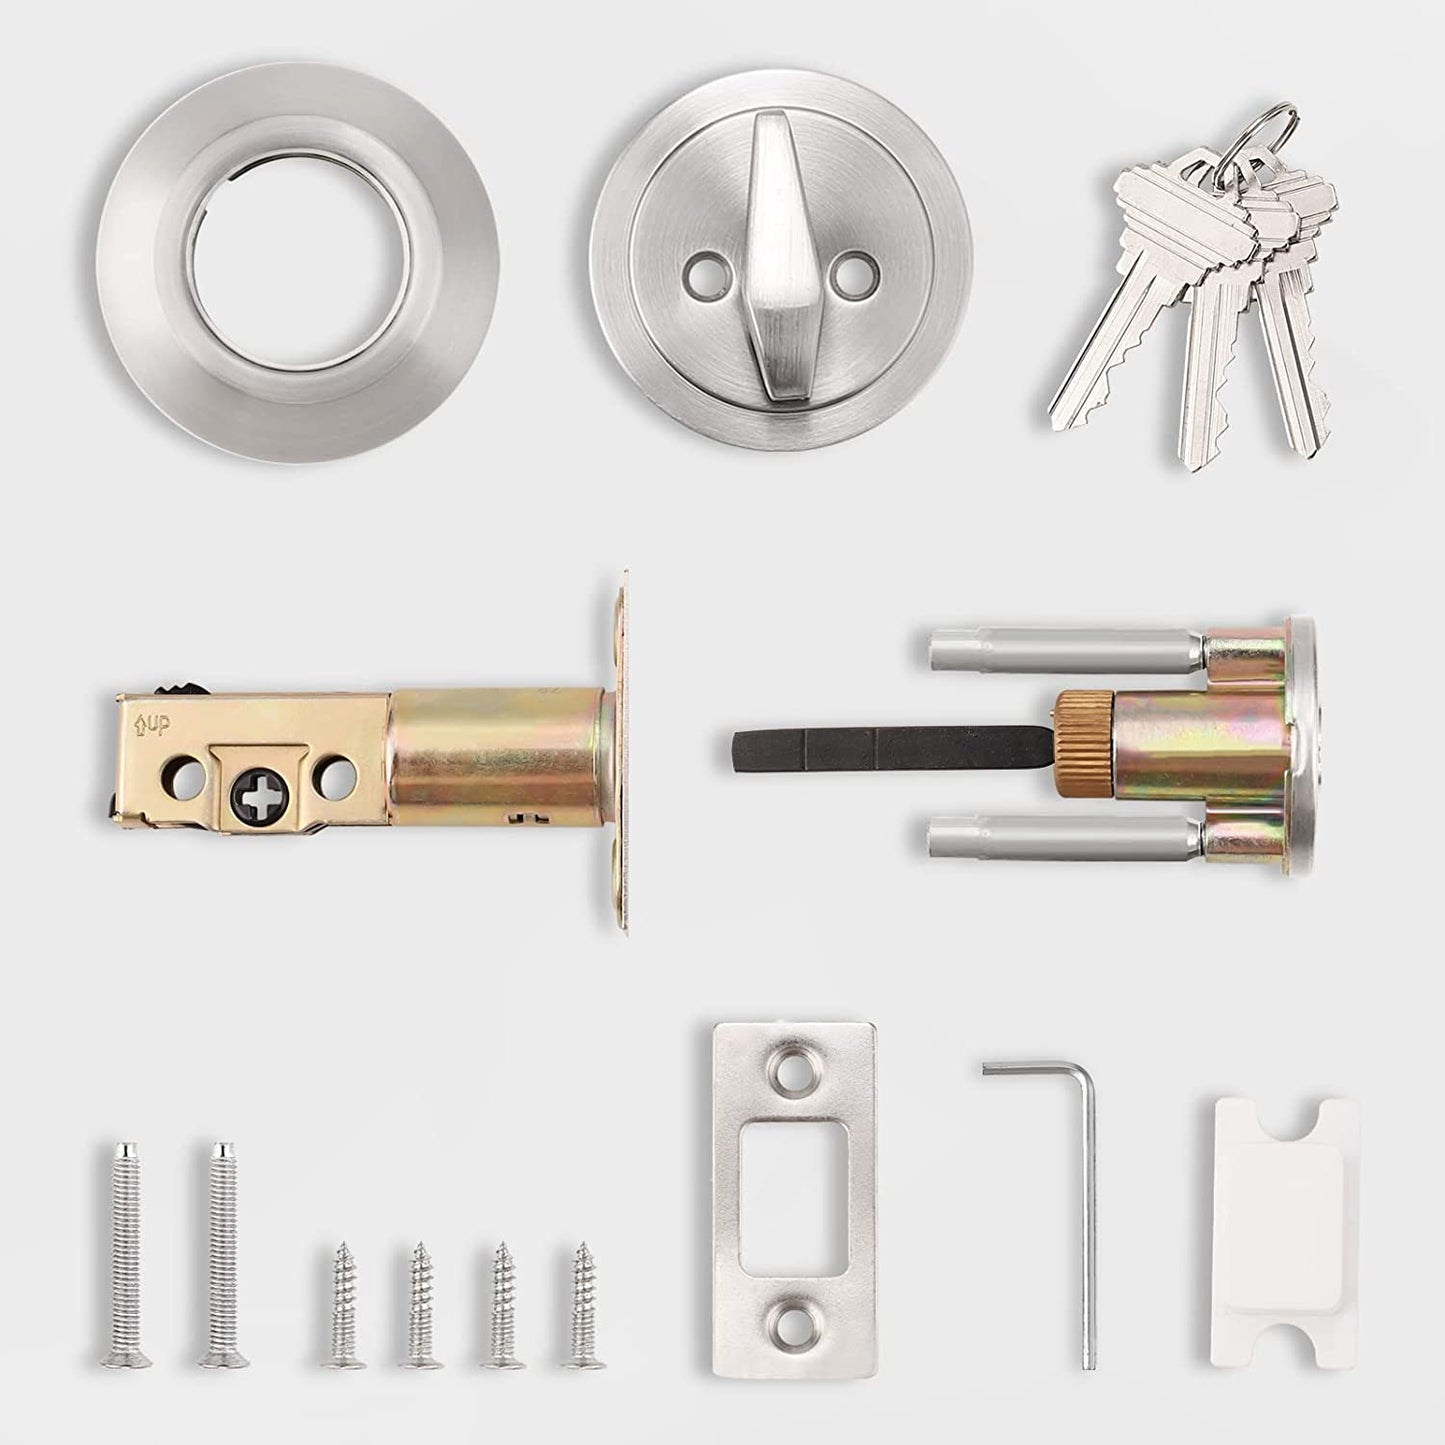 Single Cylinder Deadbolt Lock with Same Key, Oil Rubbed Bronze/Satin Nickel Keyed Door Lock DLD101 - Probrico